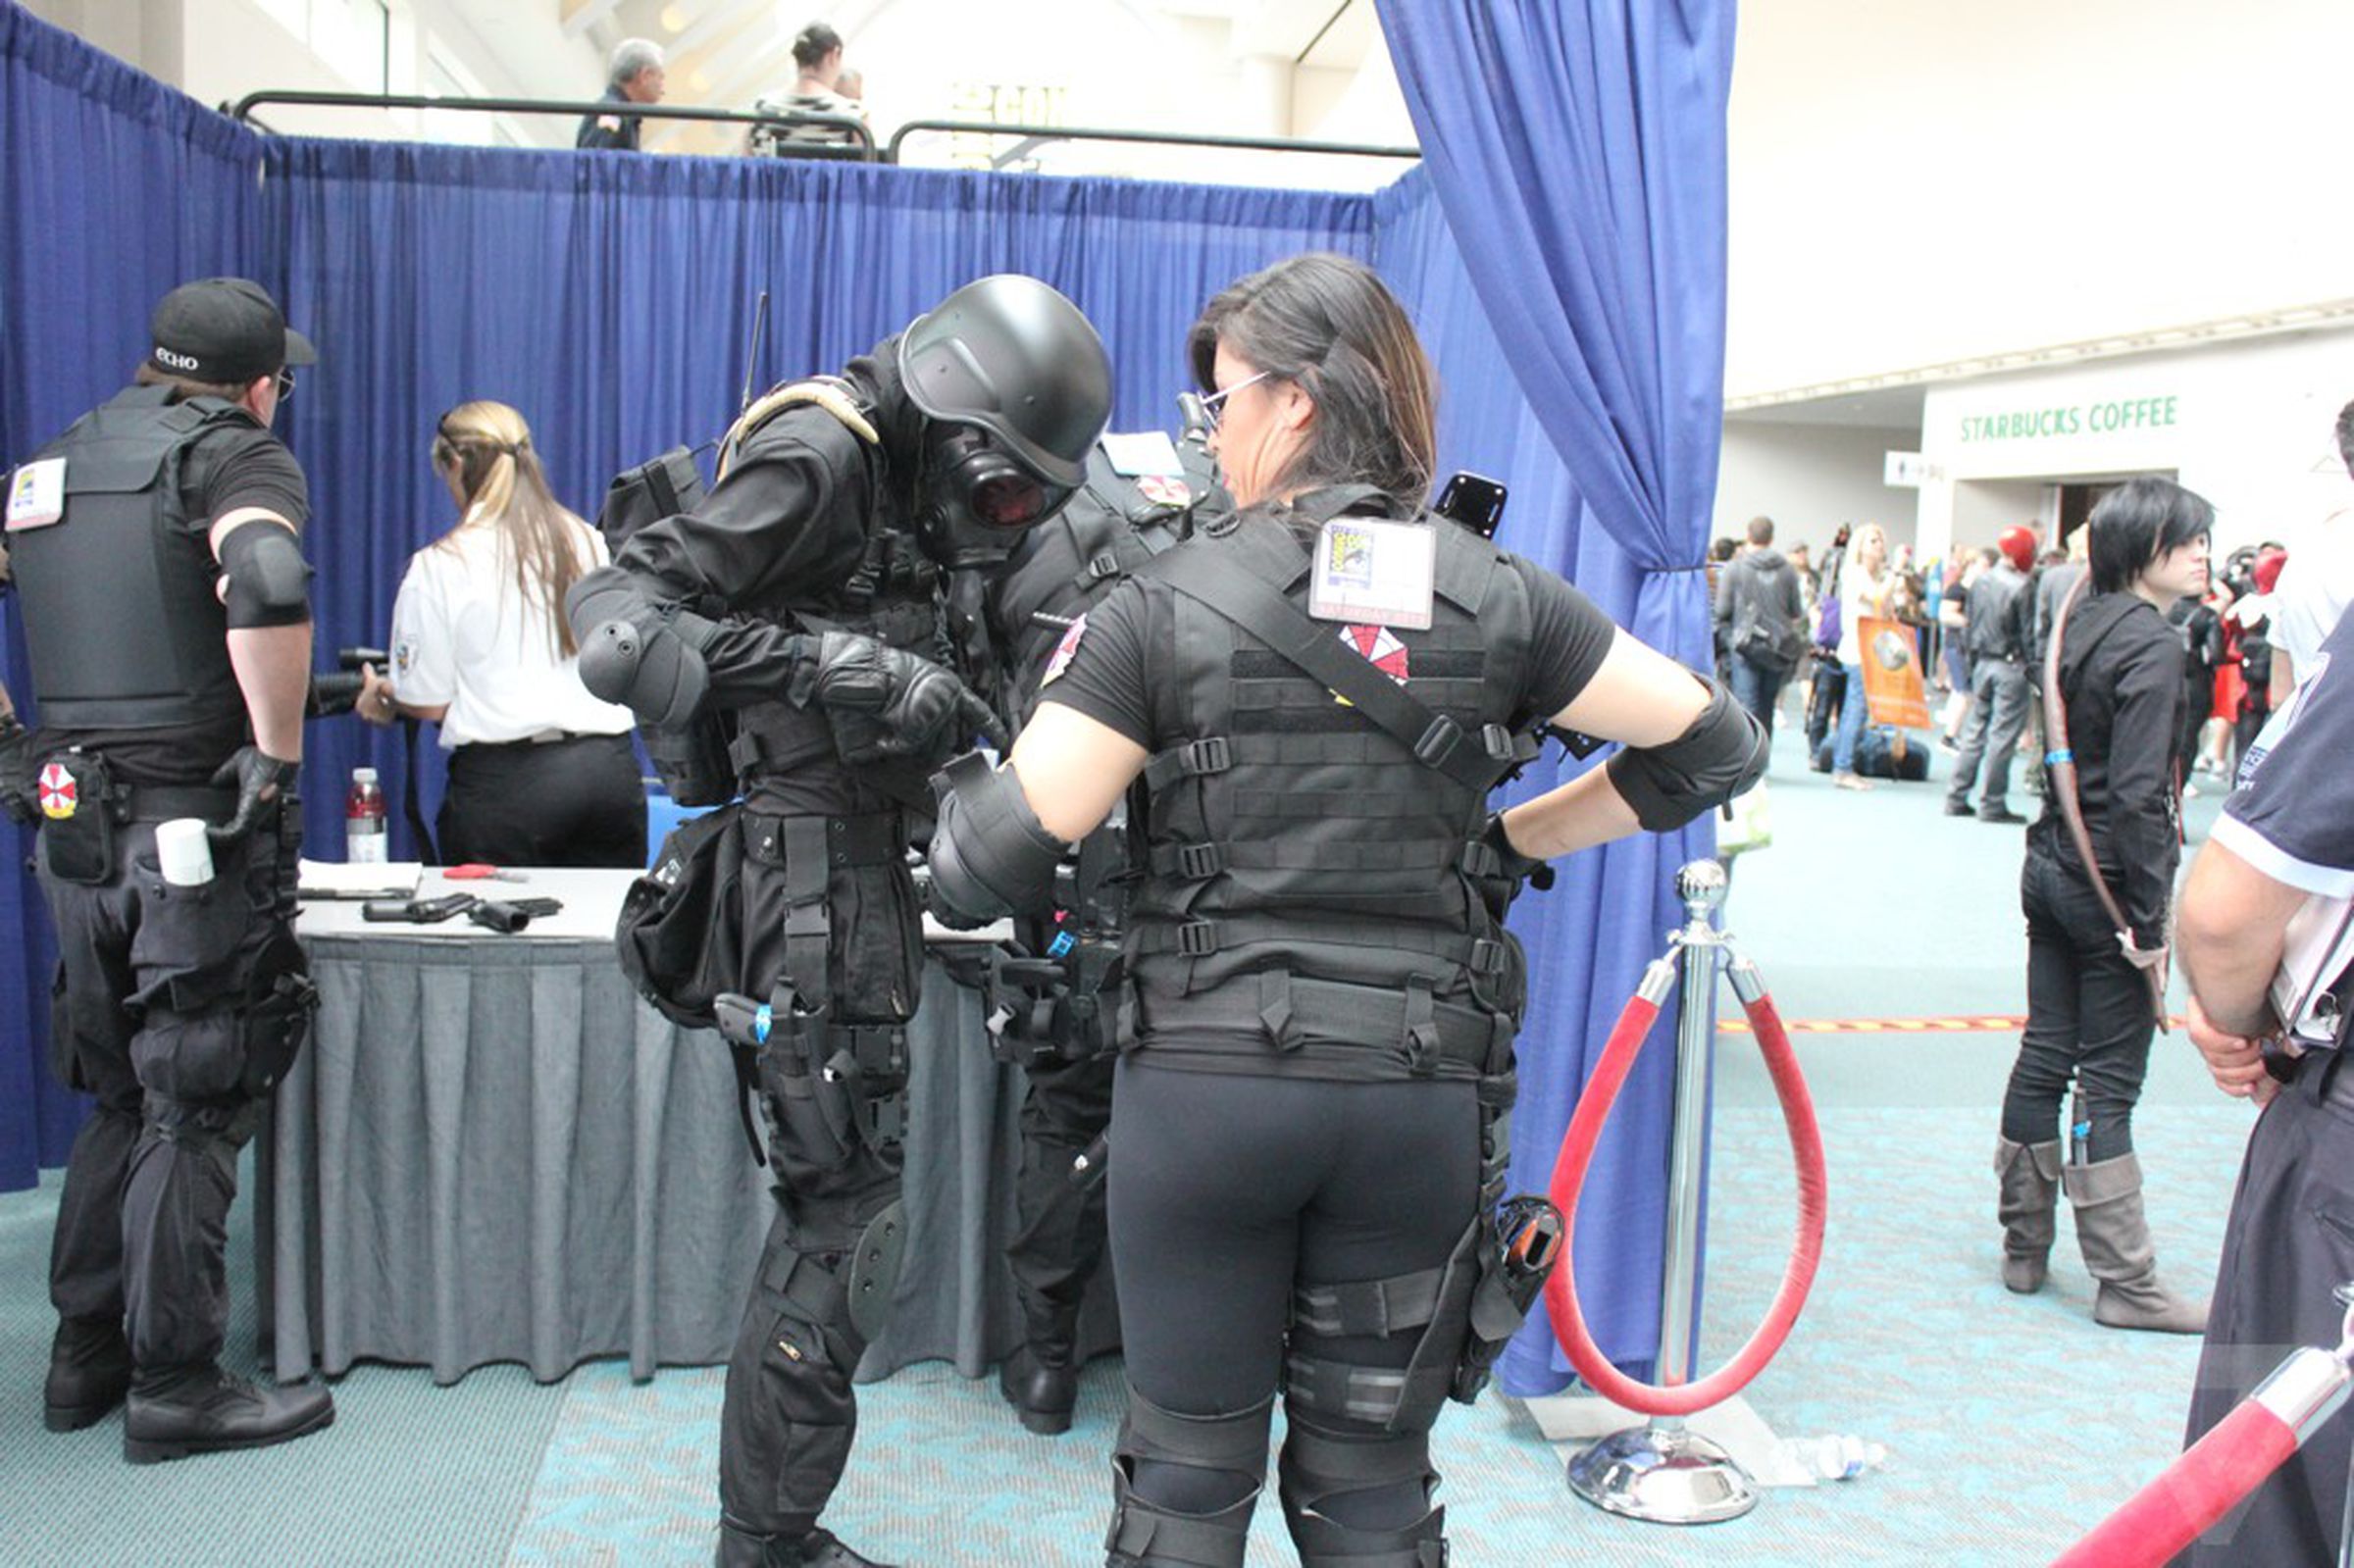 Comic-Con's weapon inspectors